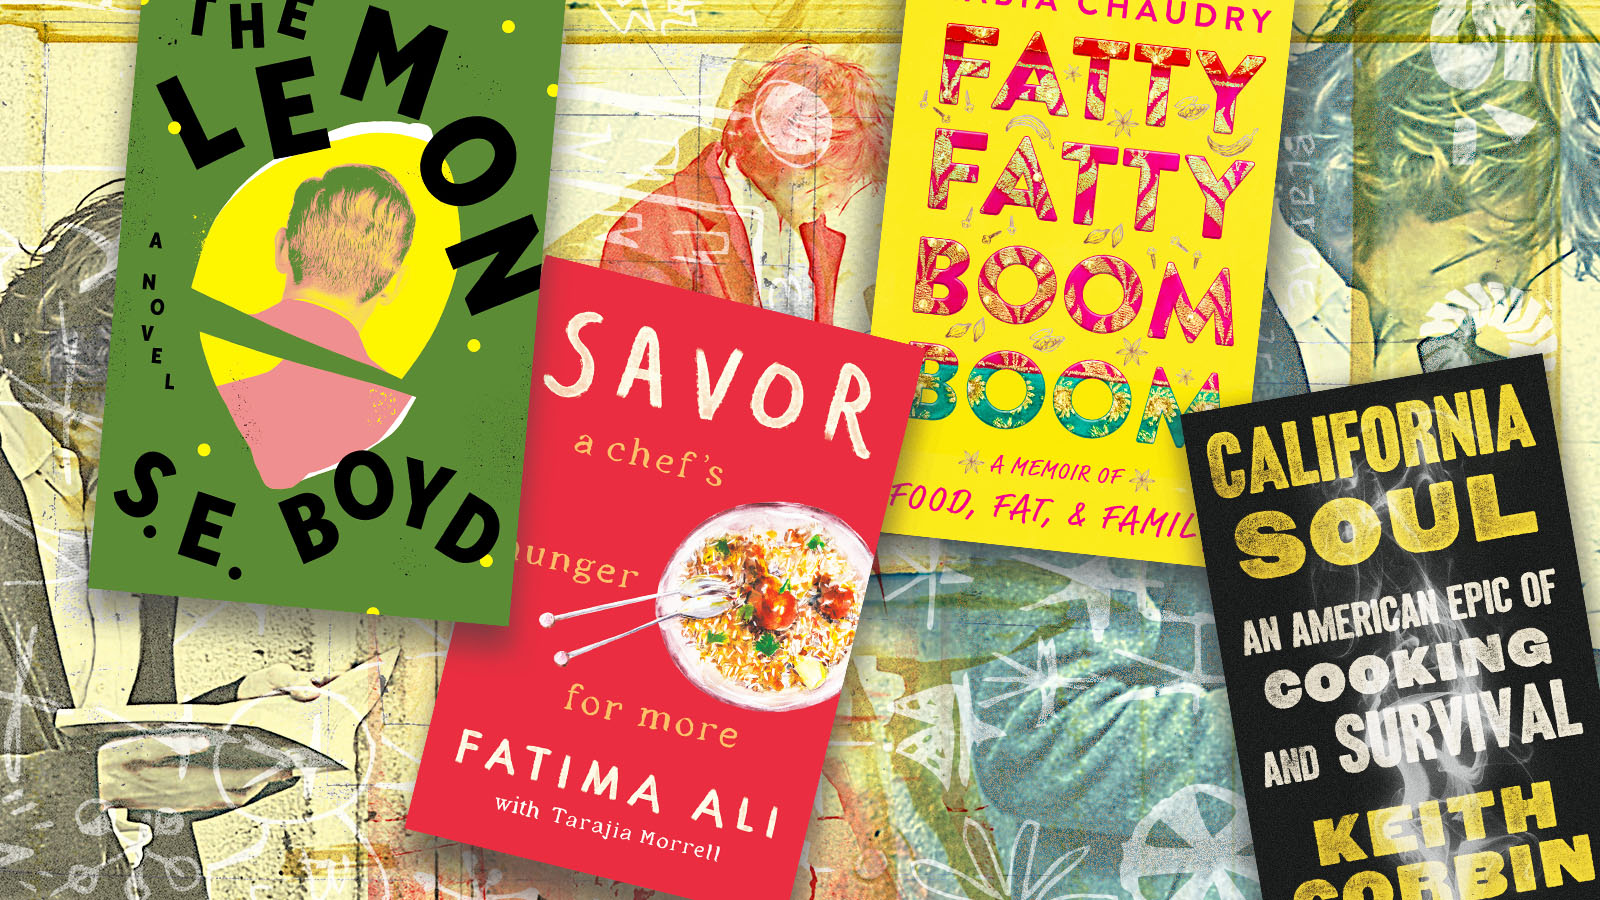 The book covers for The Lemon, Savor, Fatty Fatty Boom Boom, and California Soul